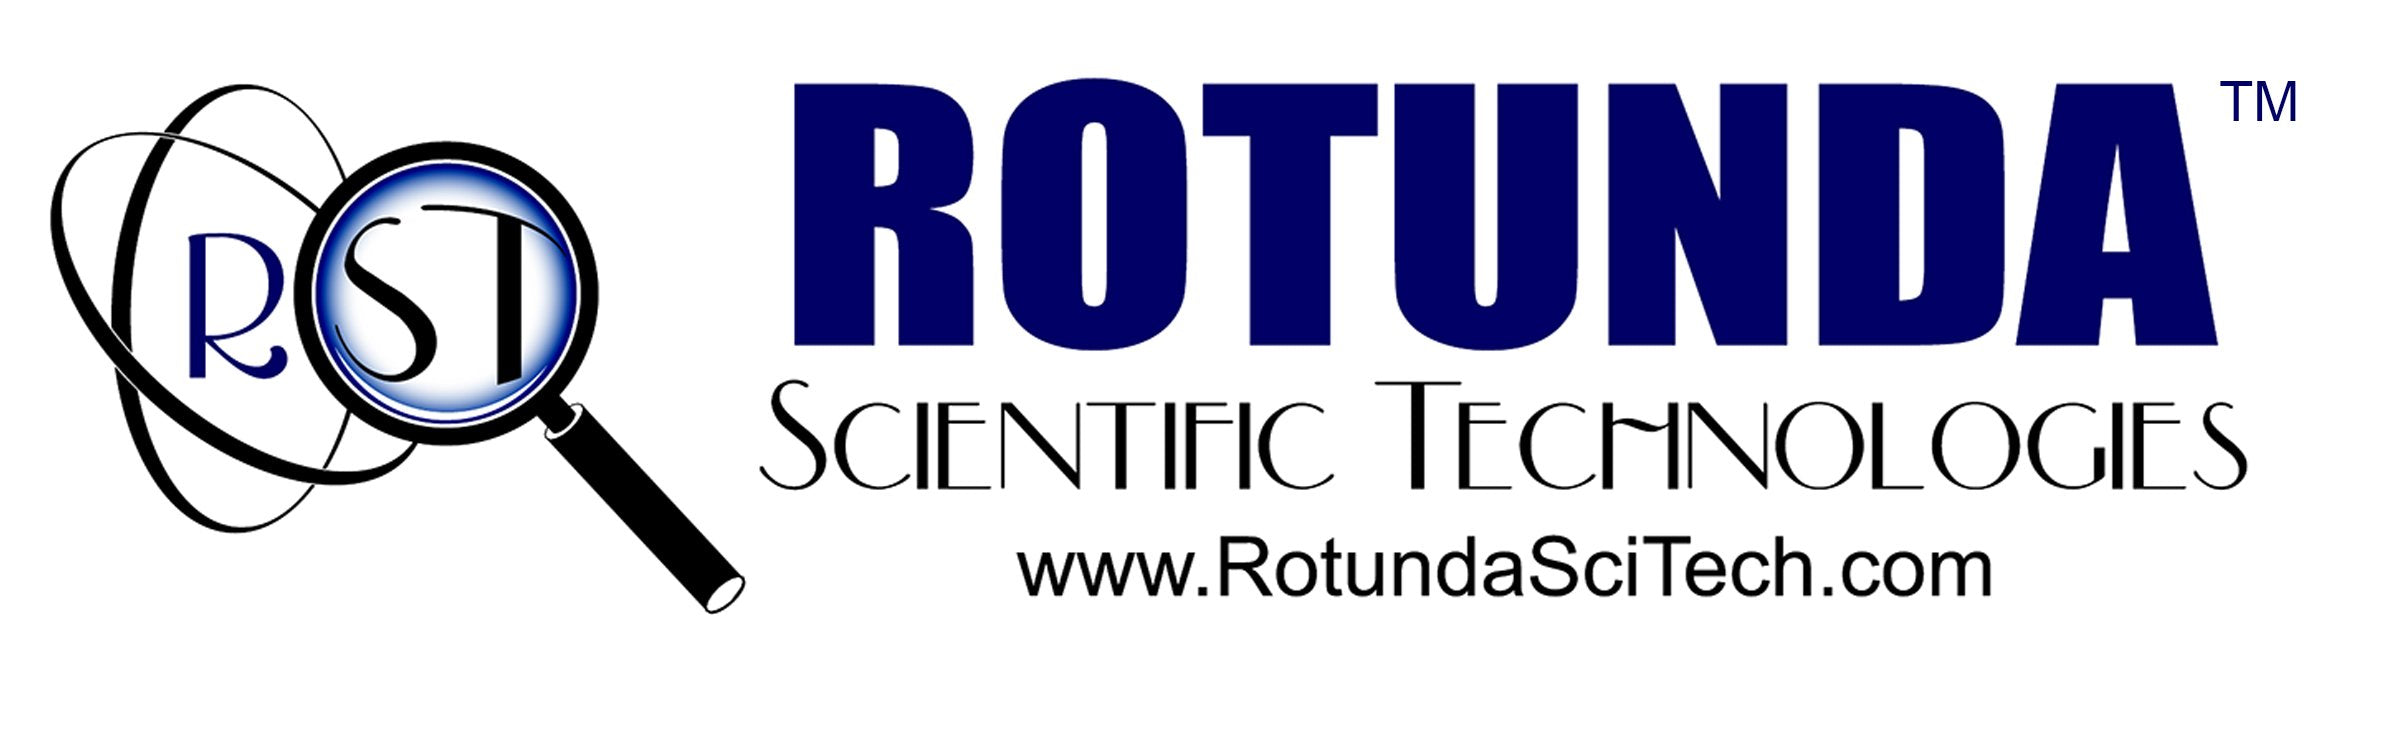 Rotunda Scientific Technologies LLC